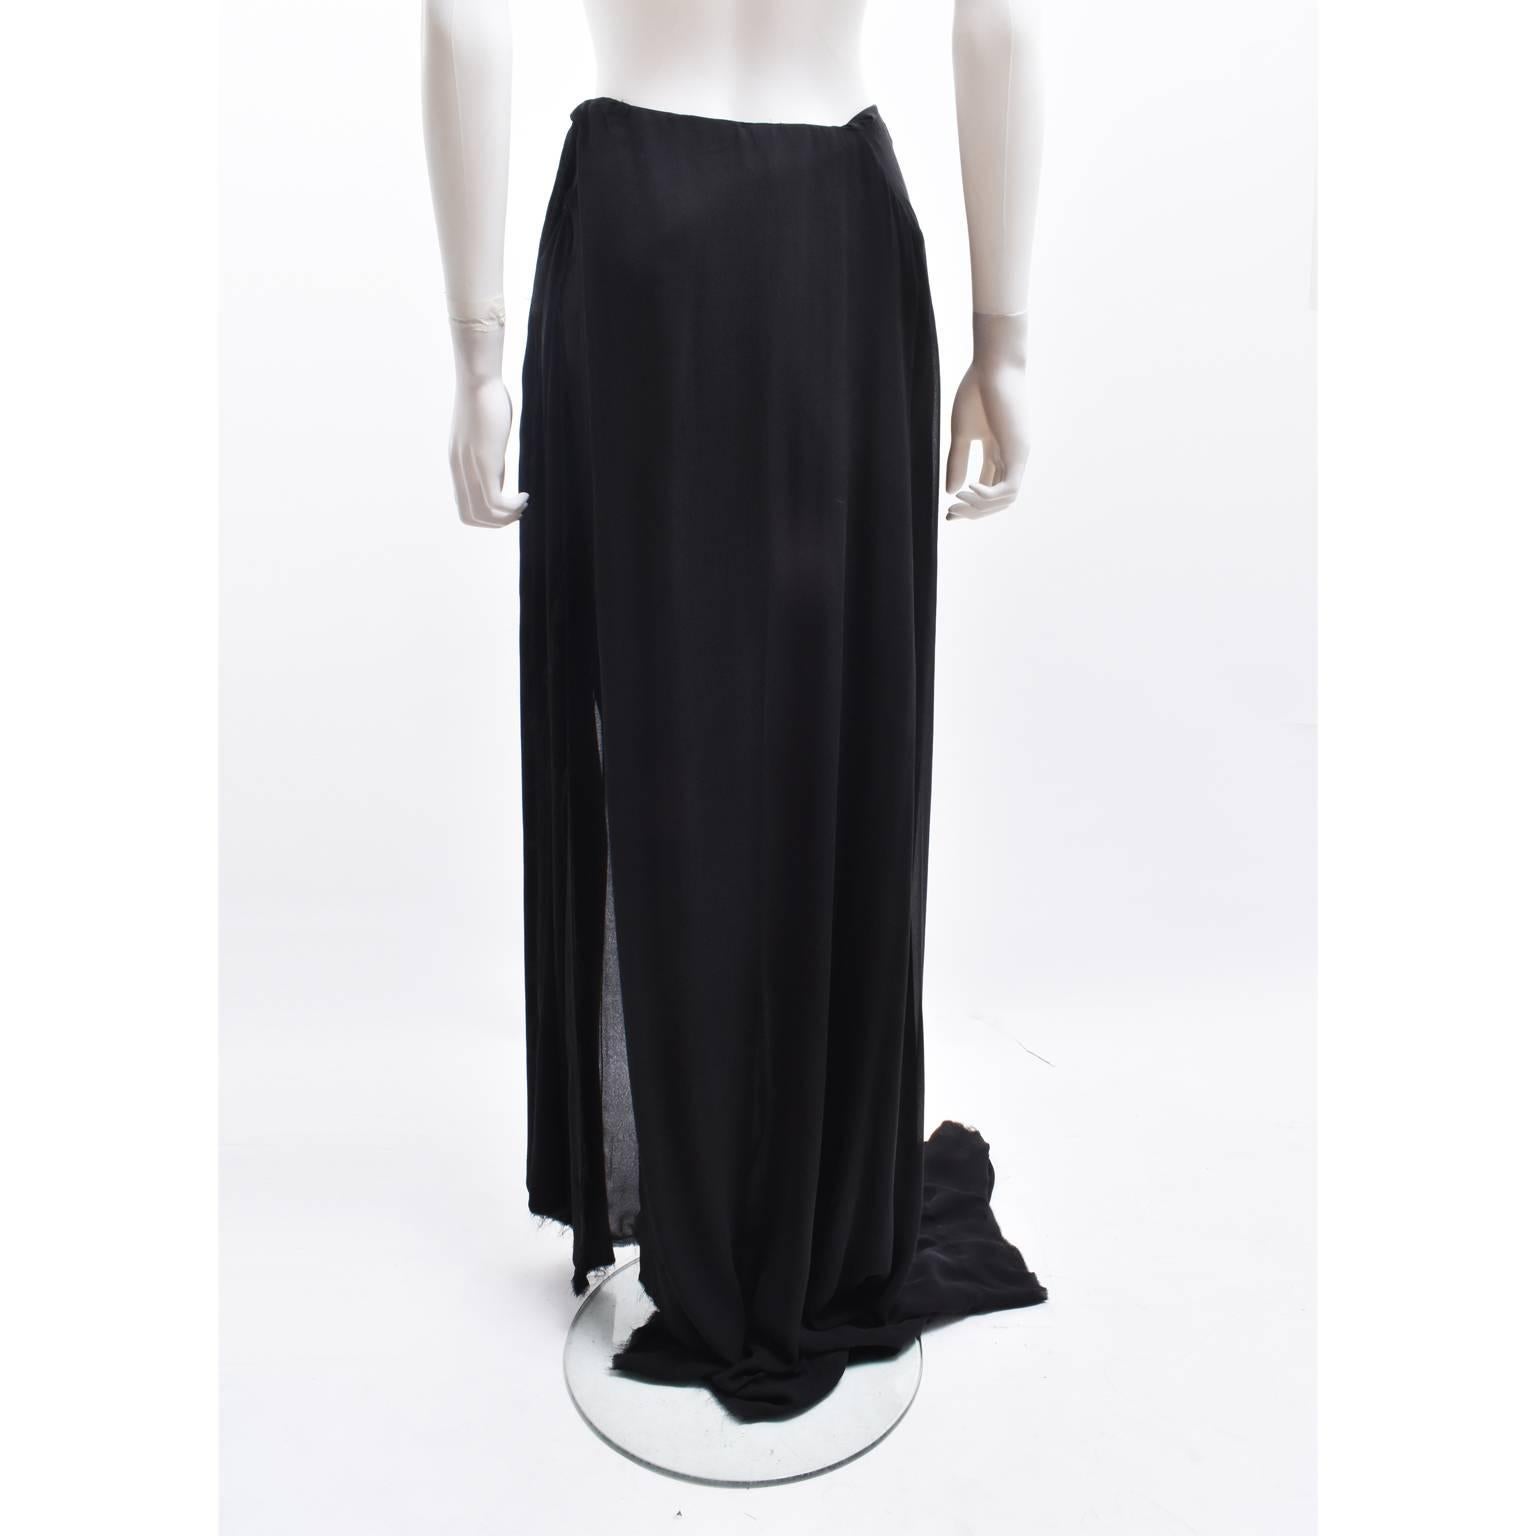 Vivienne Westwood ‘Acorn’ Black Asymmetric Skirt with Side Knot and Slit Details For Sale 1